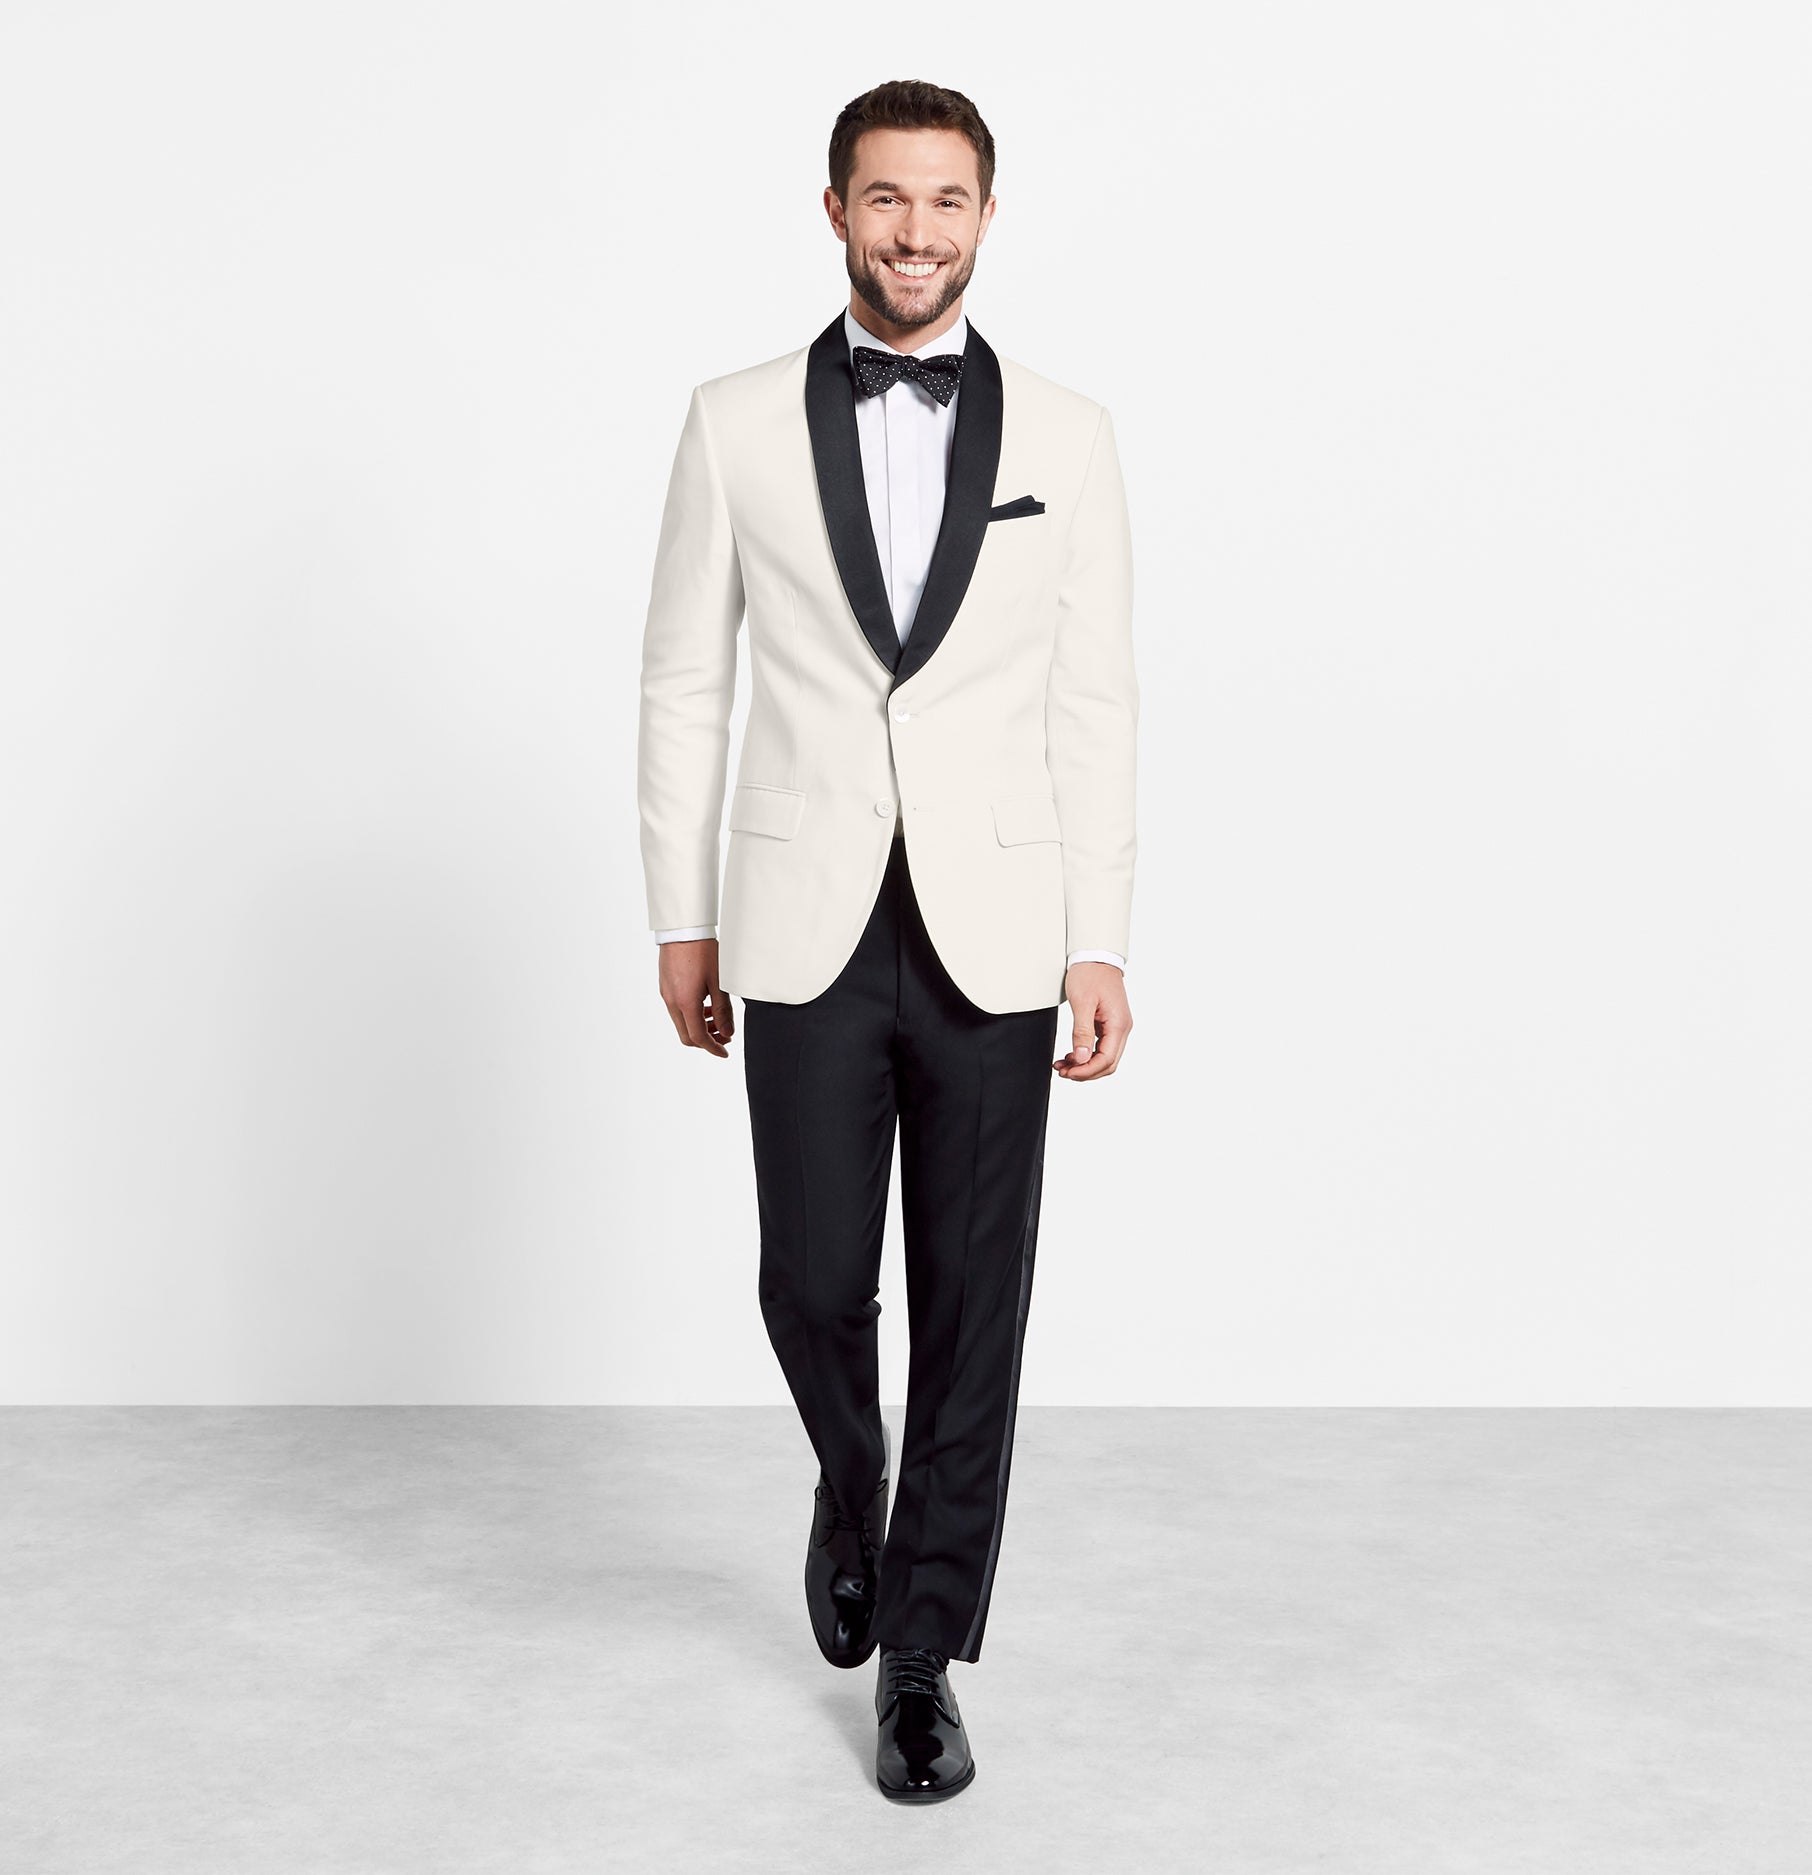 White tux | White tux, Jackets, Suit jacket